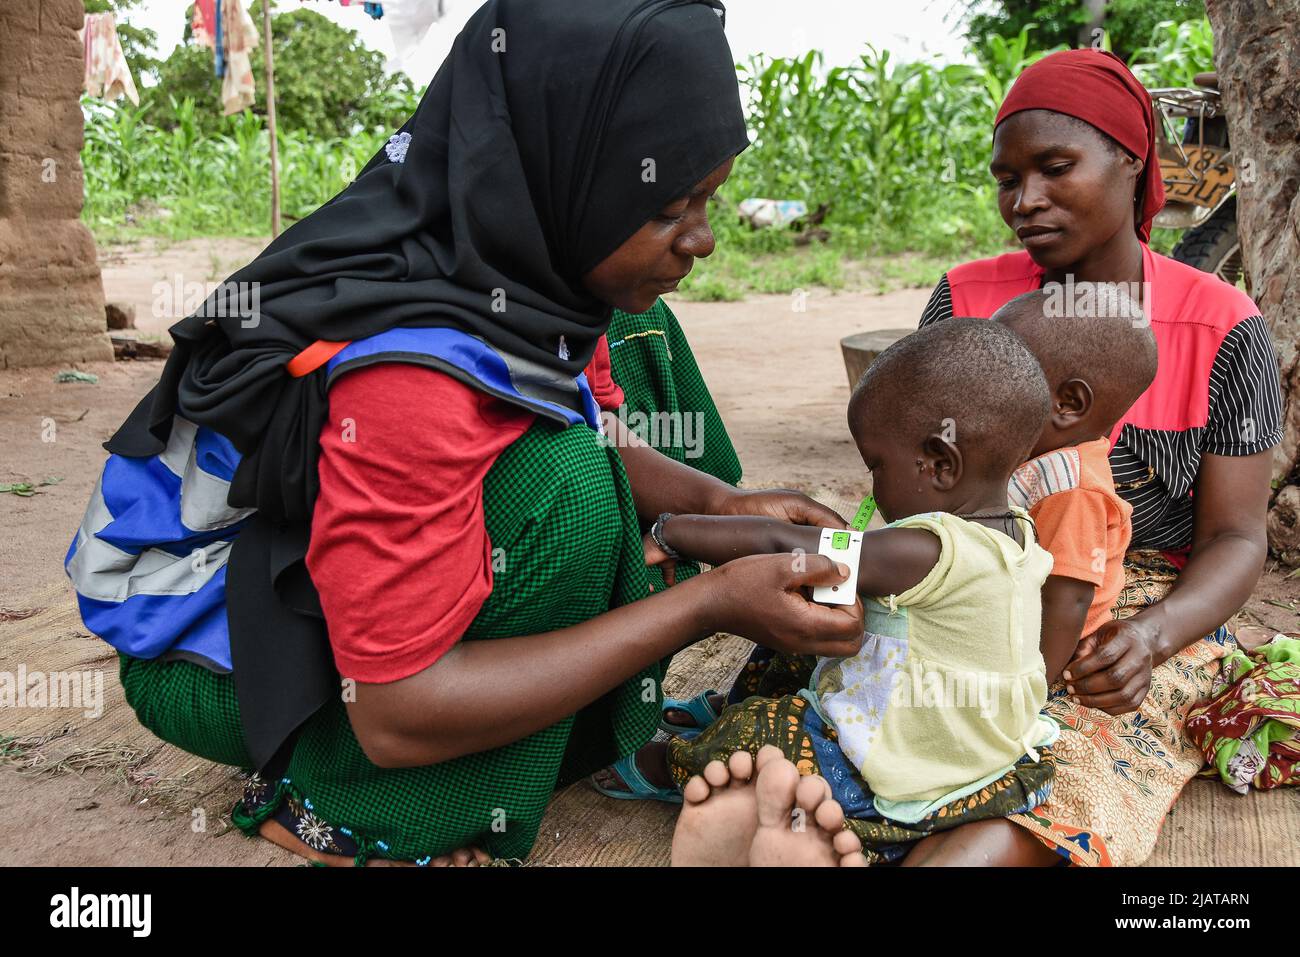 Community Health Worker measuring the level of malnutrition from the twins Faita and Khadija Mohamed at Samora village in Mtwara region, Tanzania Stock Photo